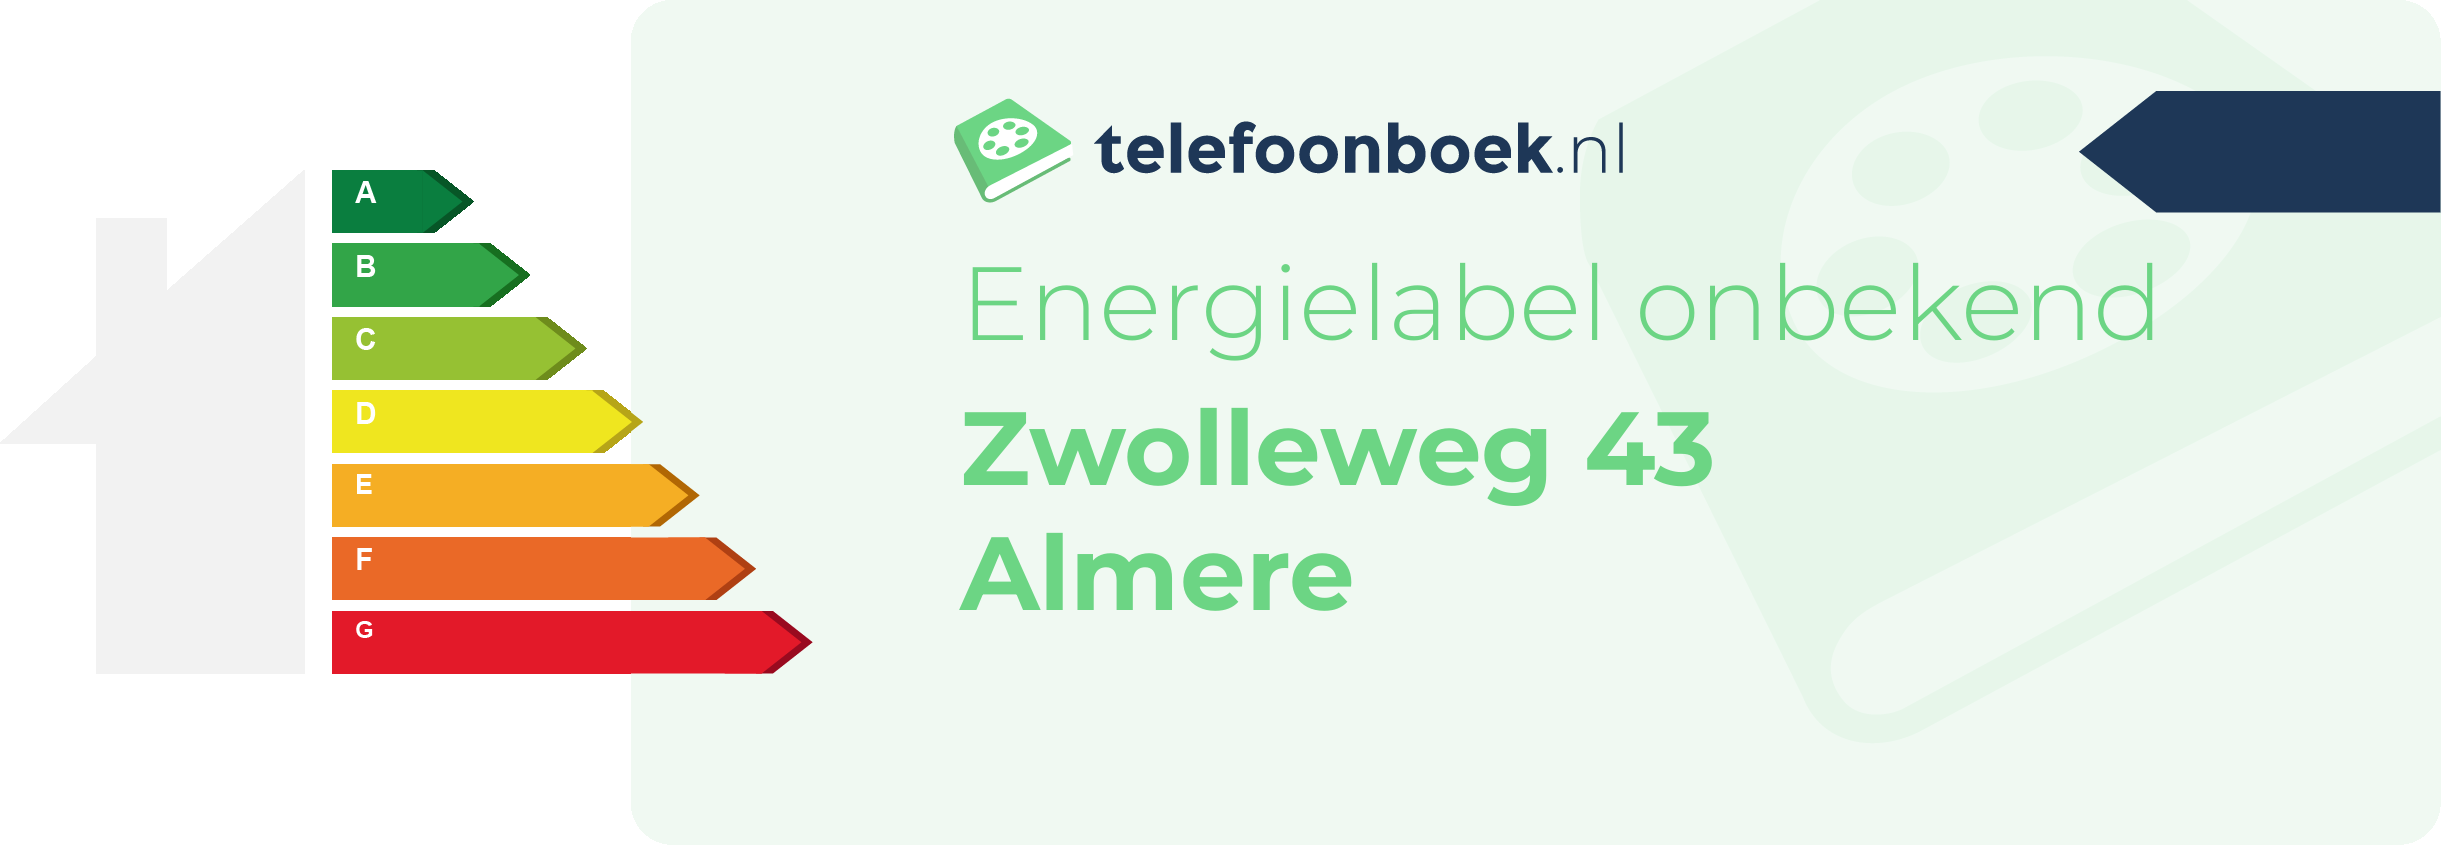 Energielabel Zwolleweg 43 Almere